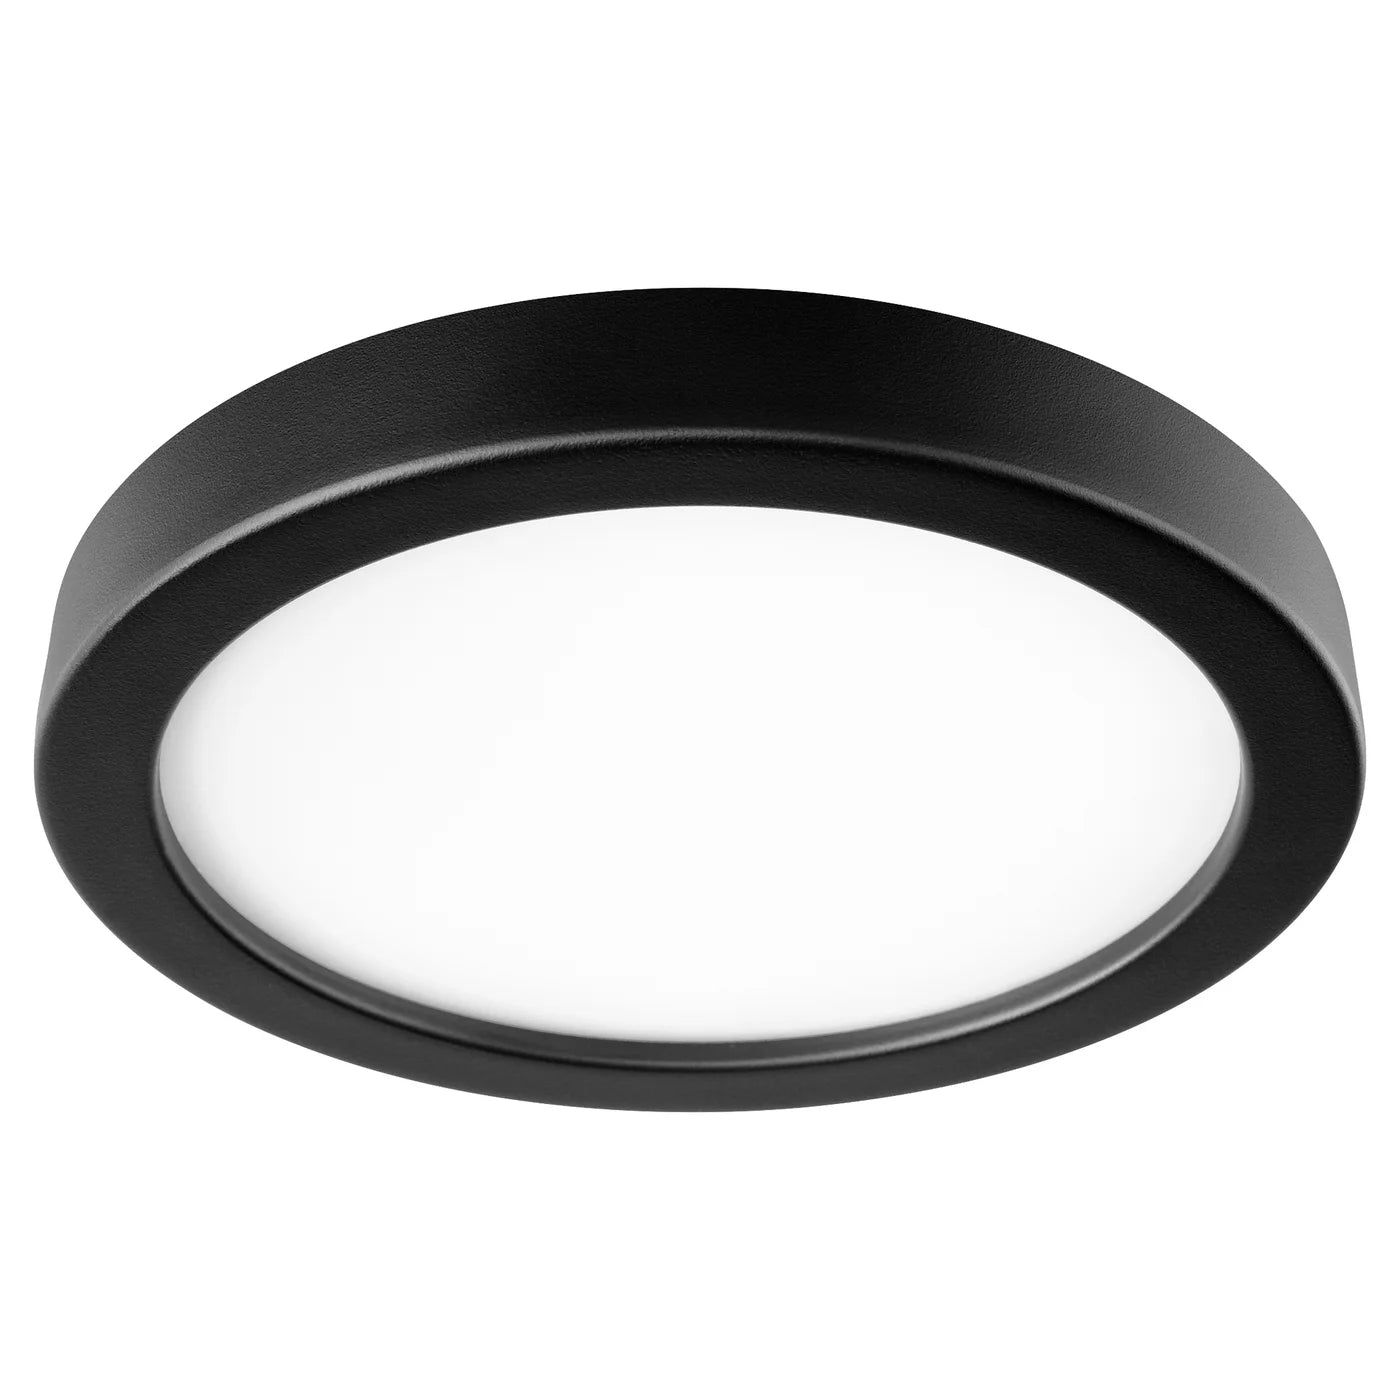 Oxygen ADORA Fan LED Light Kit – Black, White or Satin Nickel